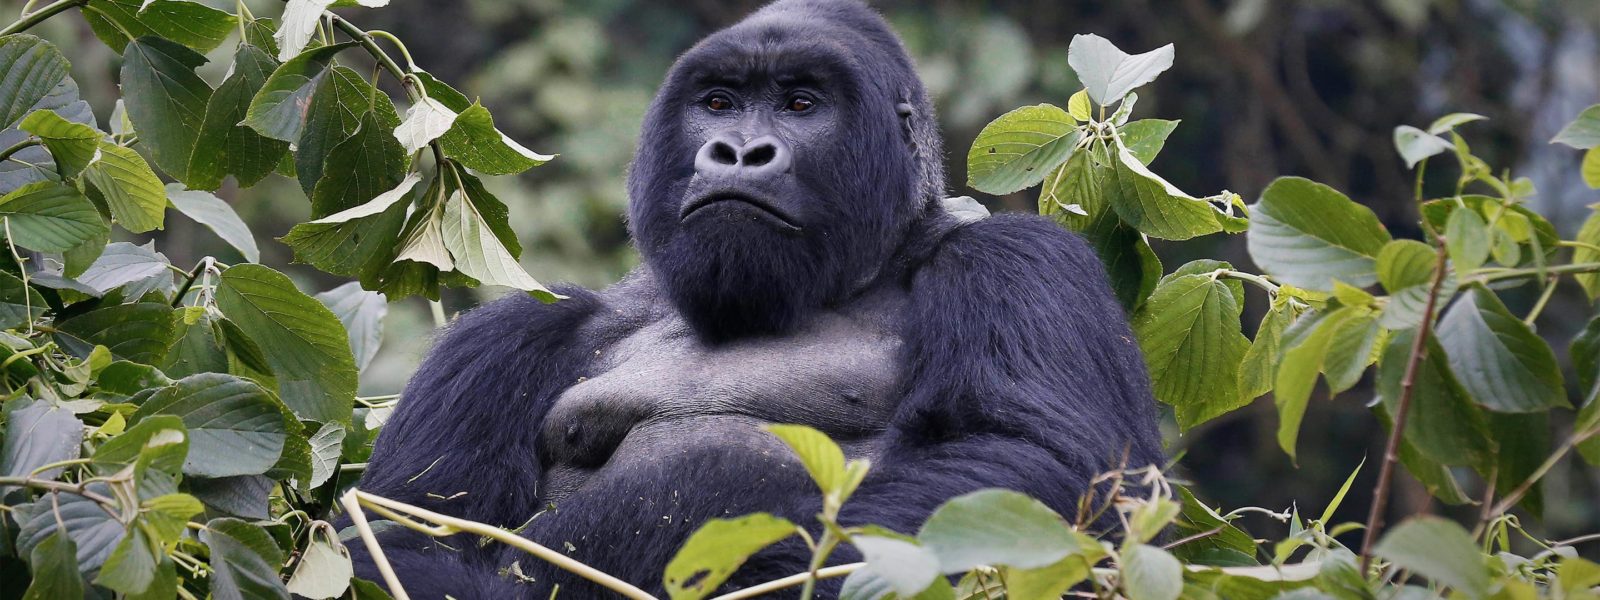 Price of a gorilla permit | Gorillas & cats in Uganda